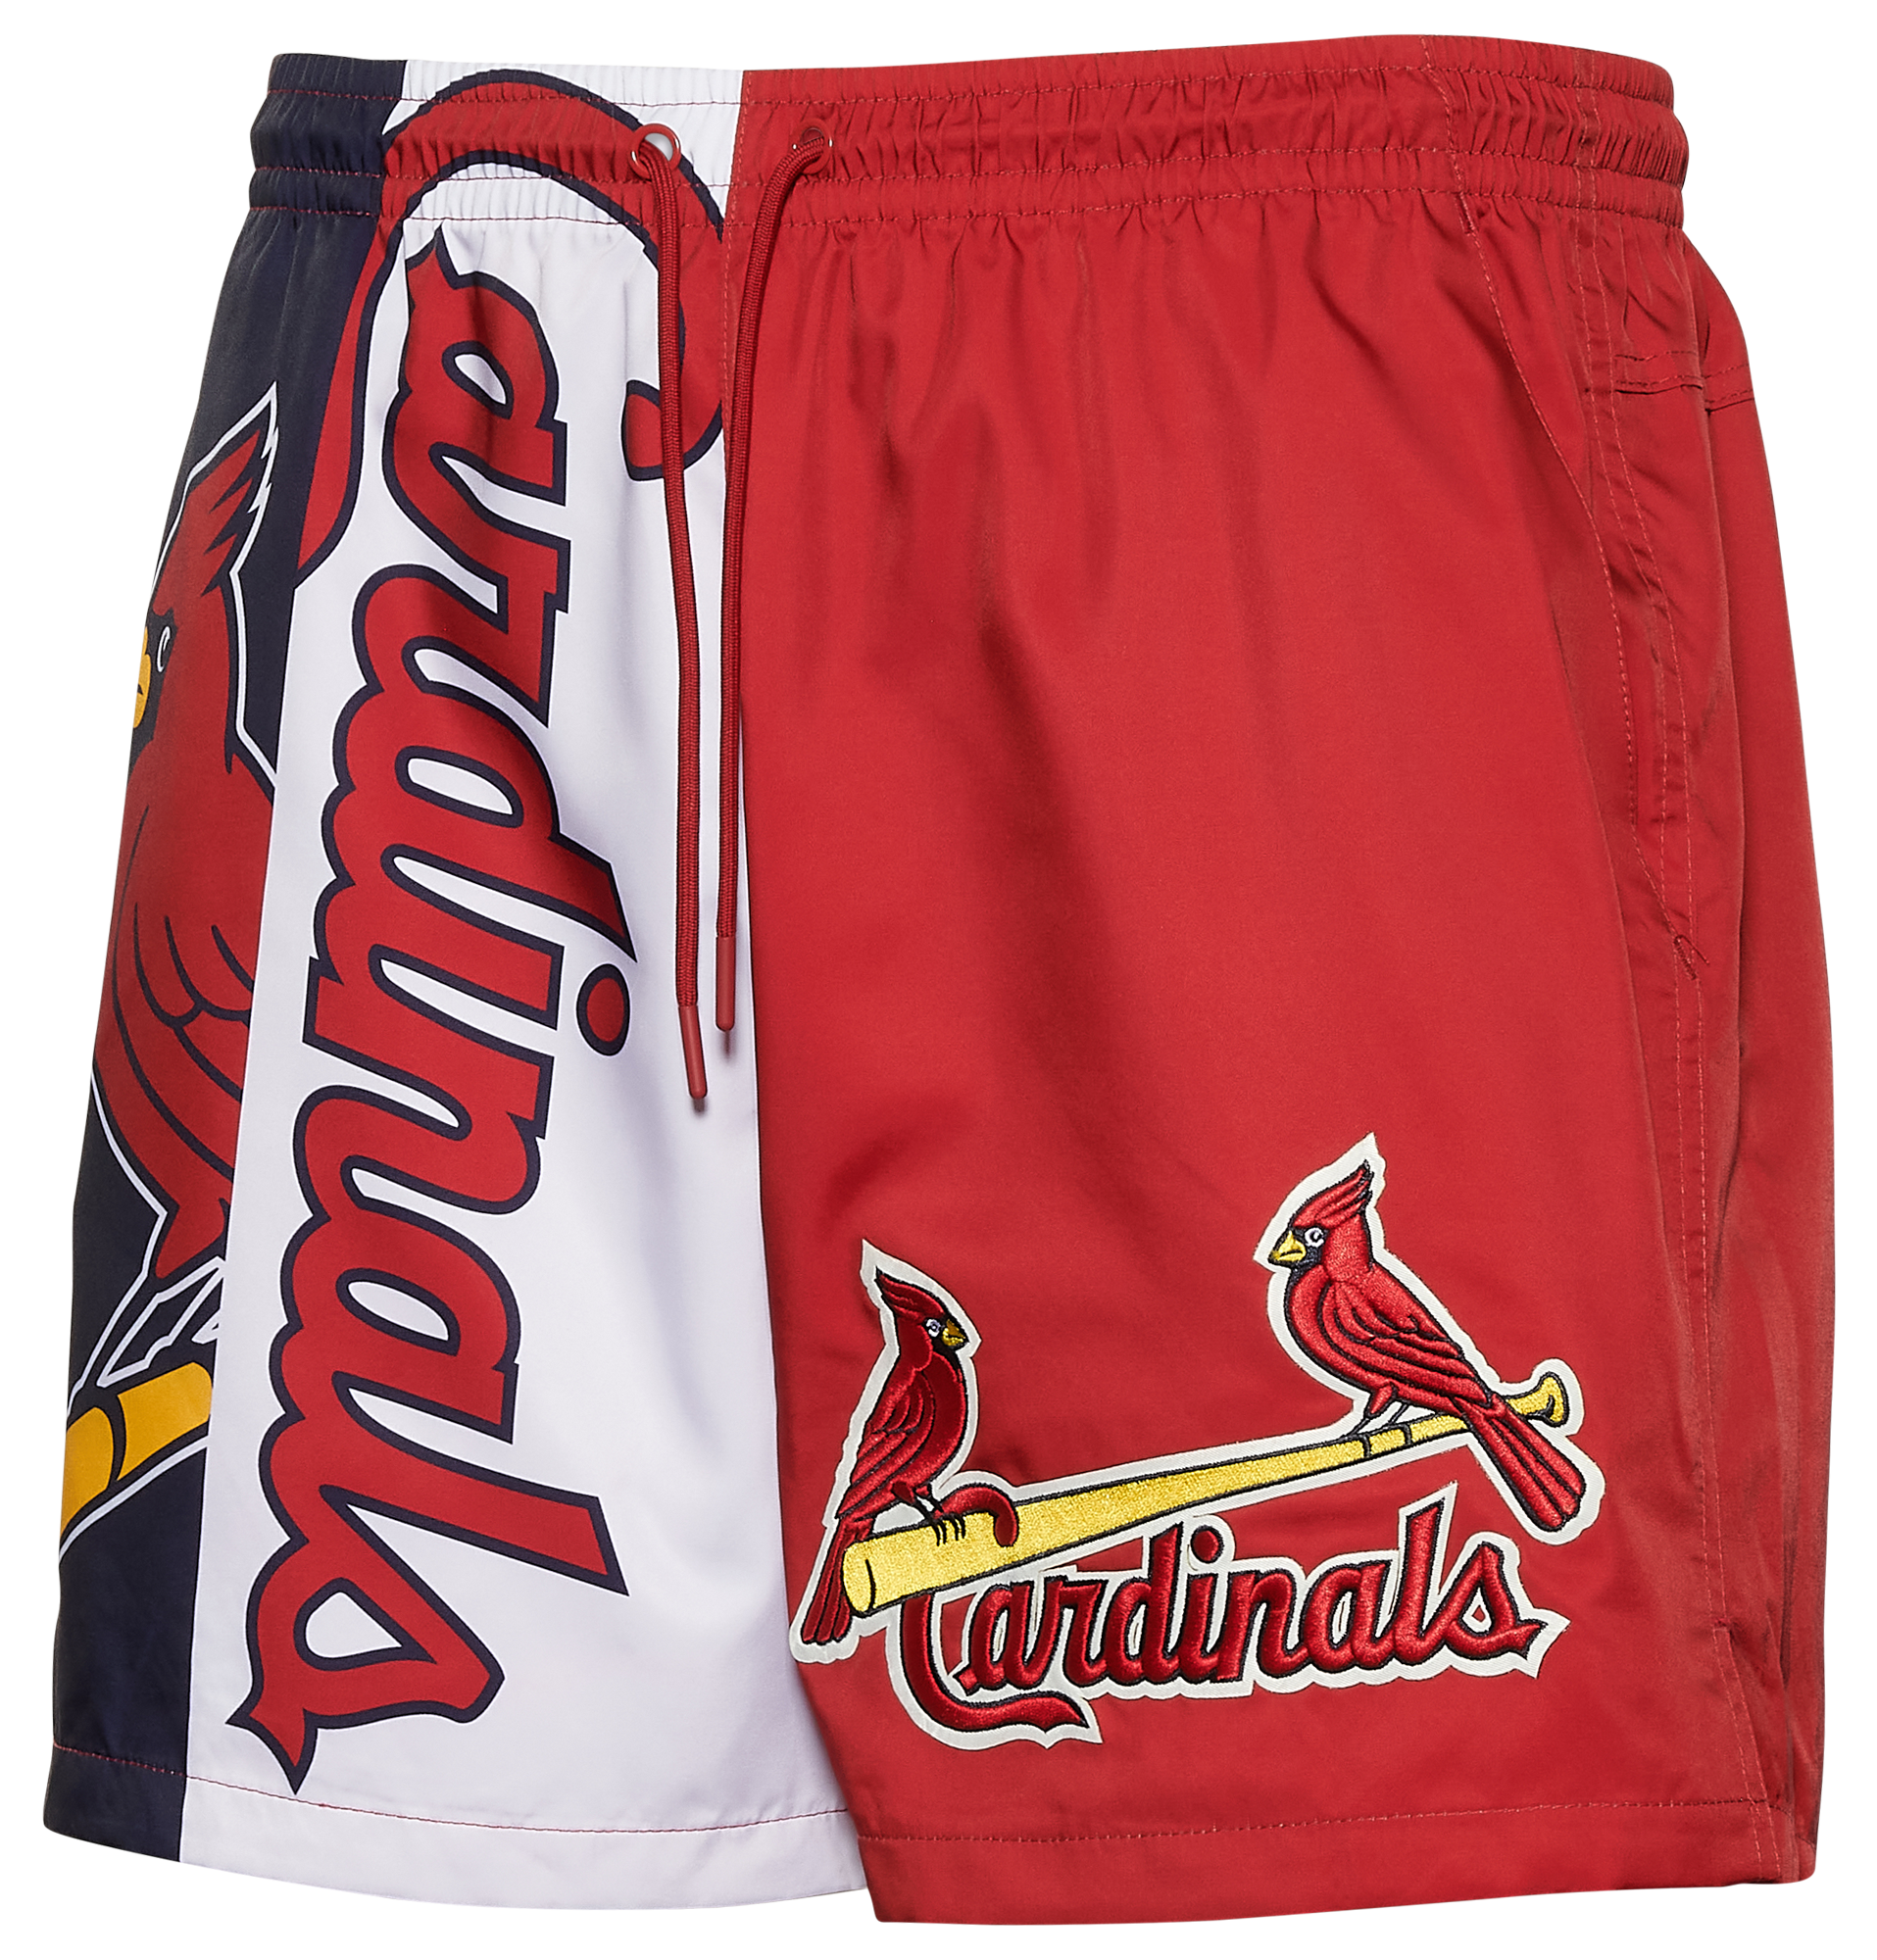 St. Louis Cardinals Pro Standard Mesh Shorts - Red